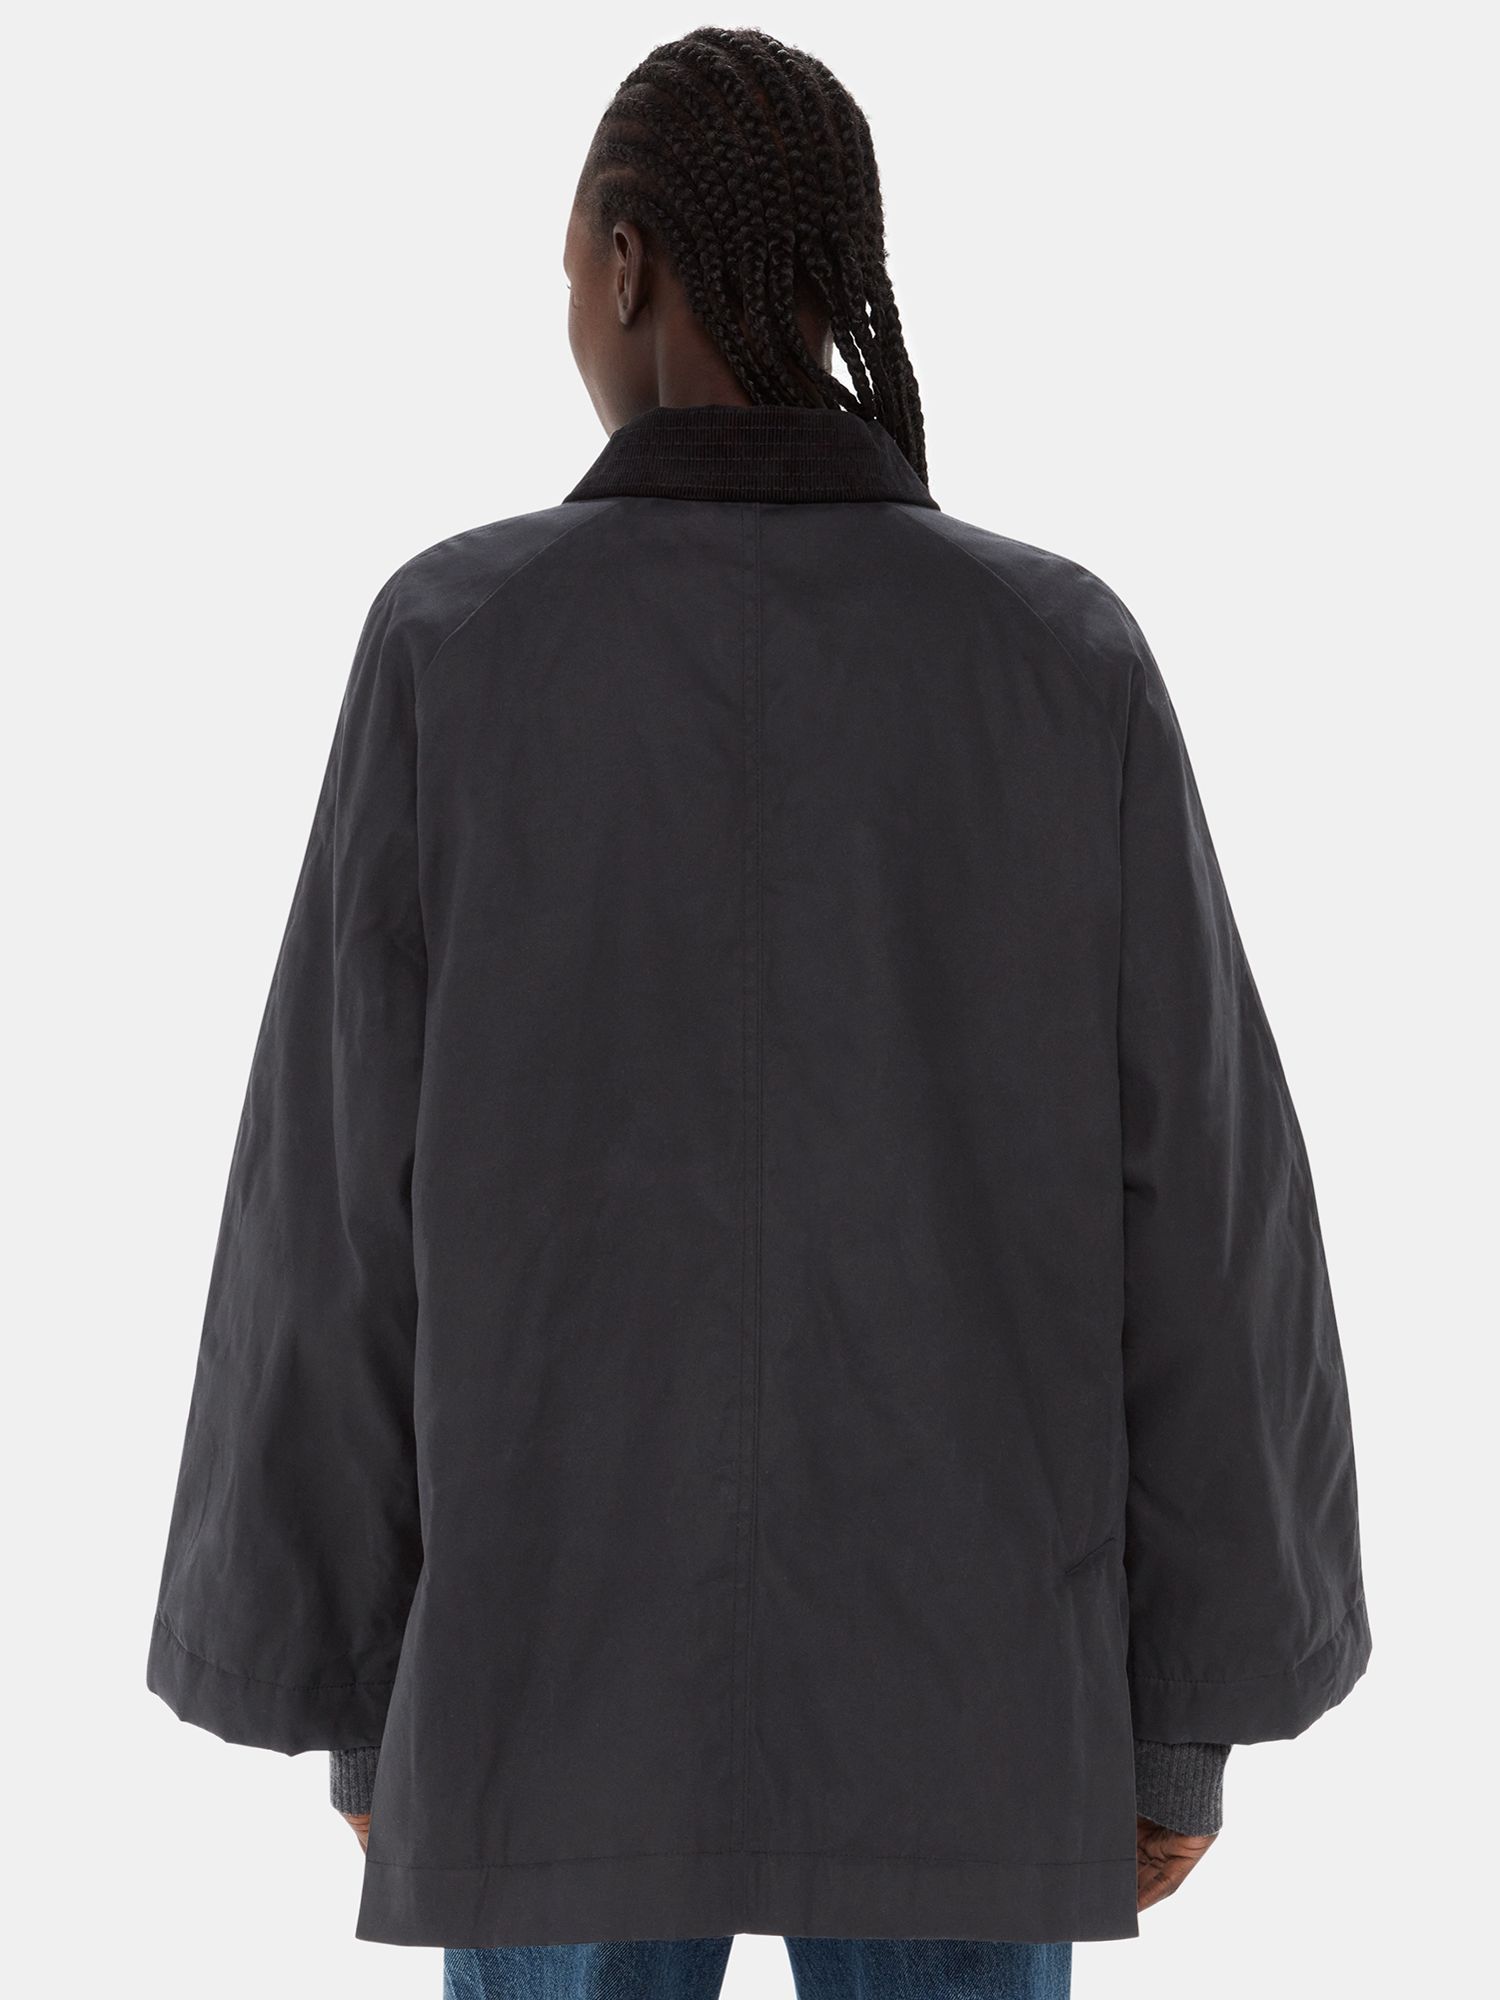 Whistles Fern Waxed Cotton Jacket, Black at John Lewis & Partners